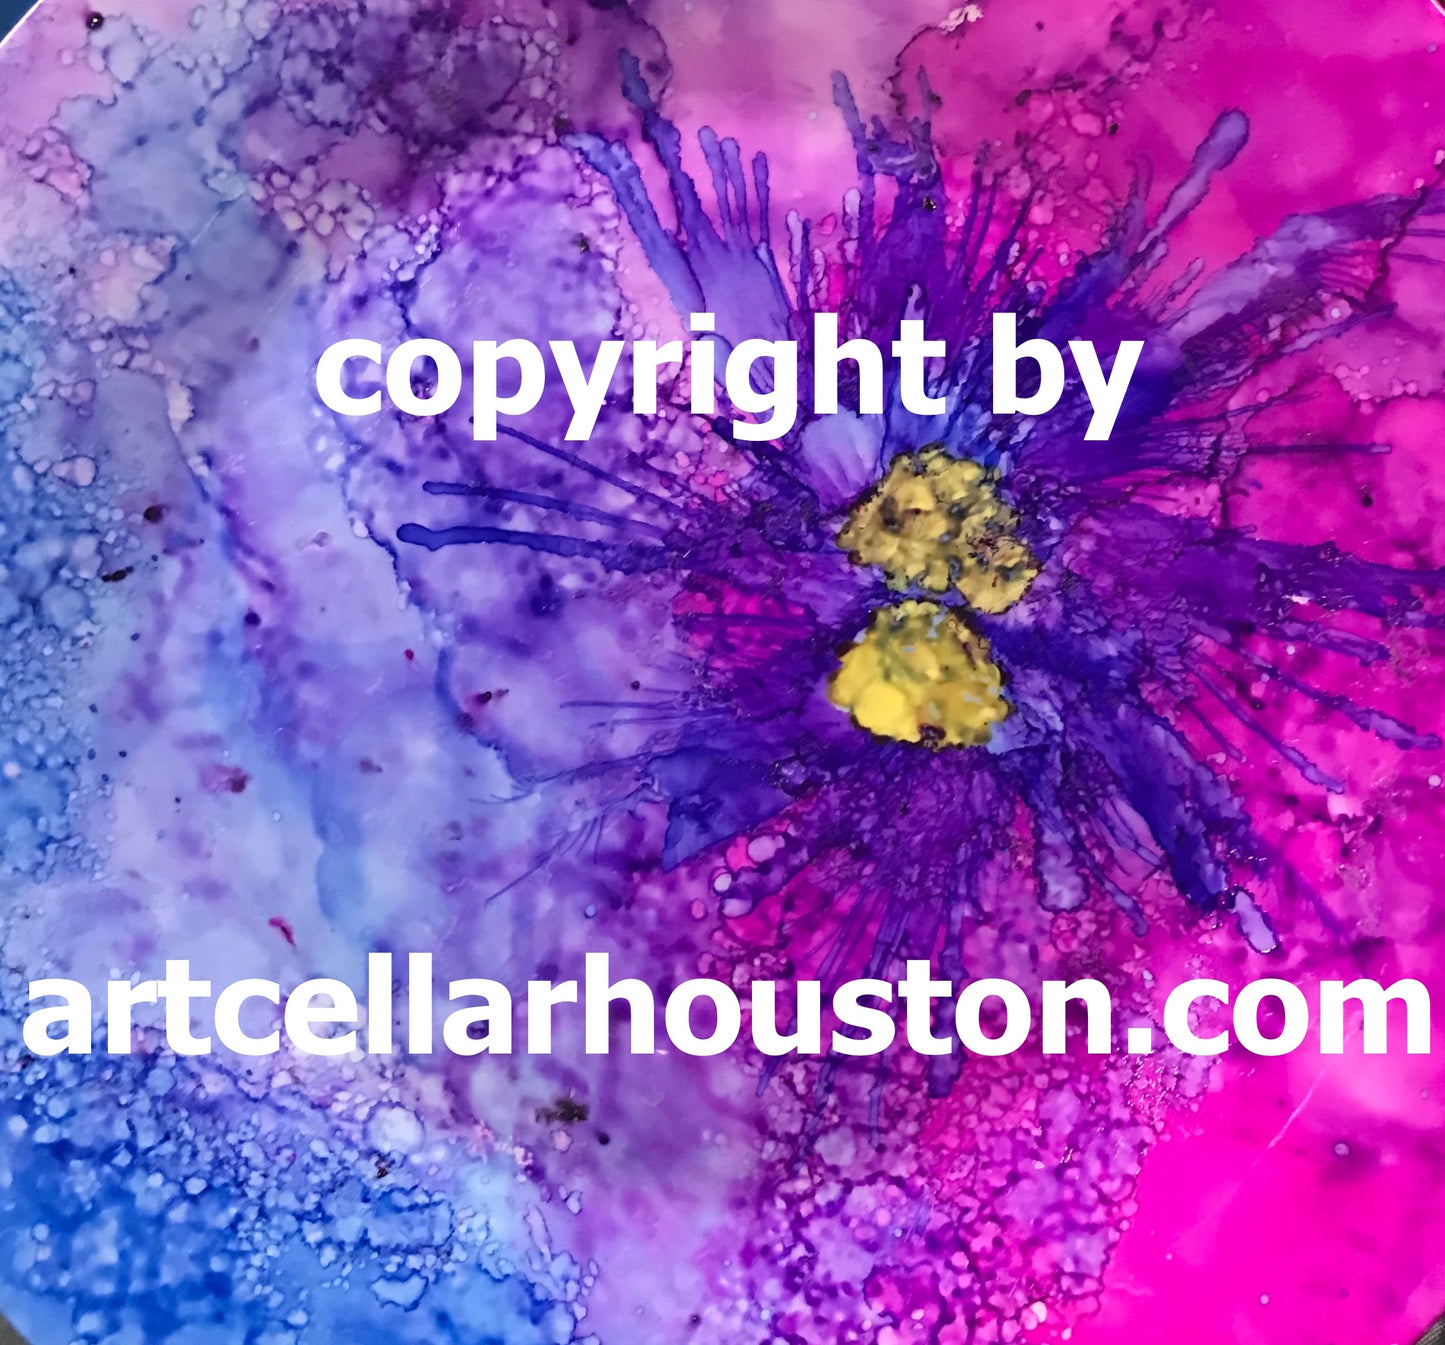 Wed, Feb 12, 4-6p “Alcohol Inks: Love Notes” Public Houston Kids Paint Class